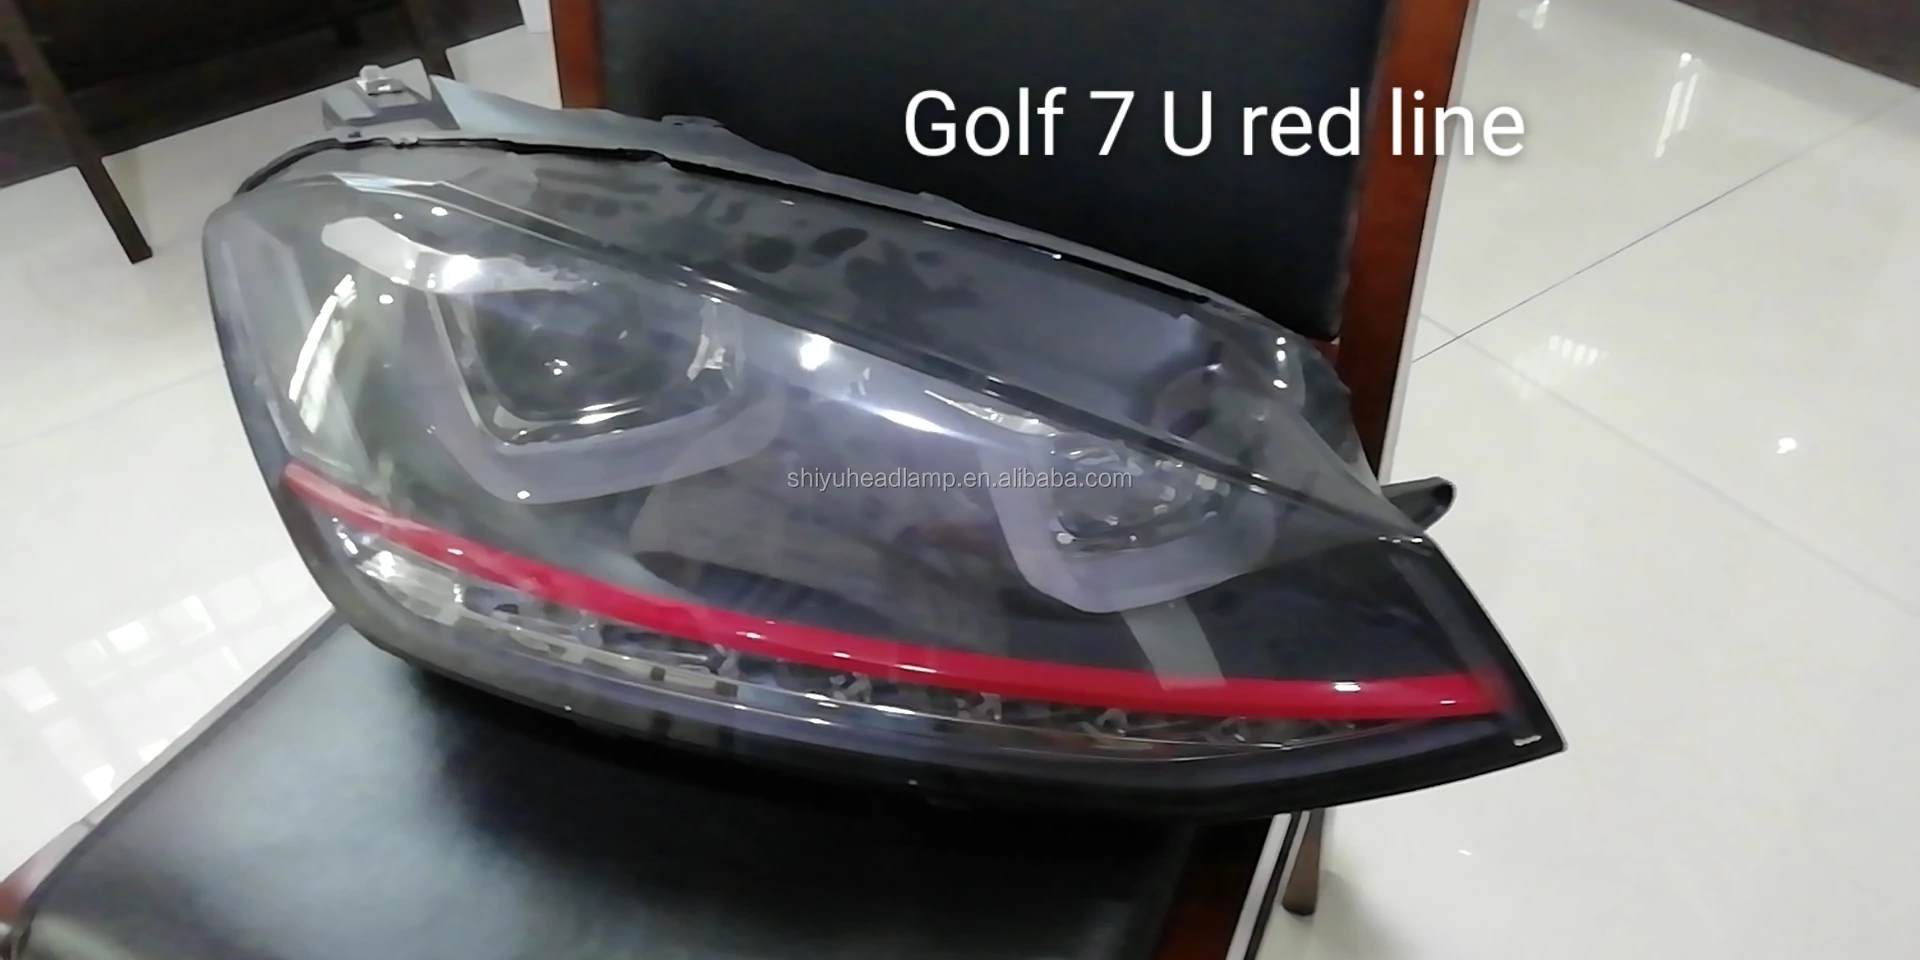 SHIYU wholesale price UU xenon headlight for golf 7 13-17